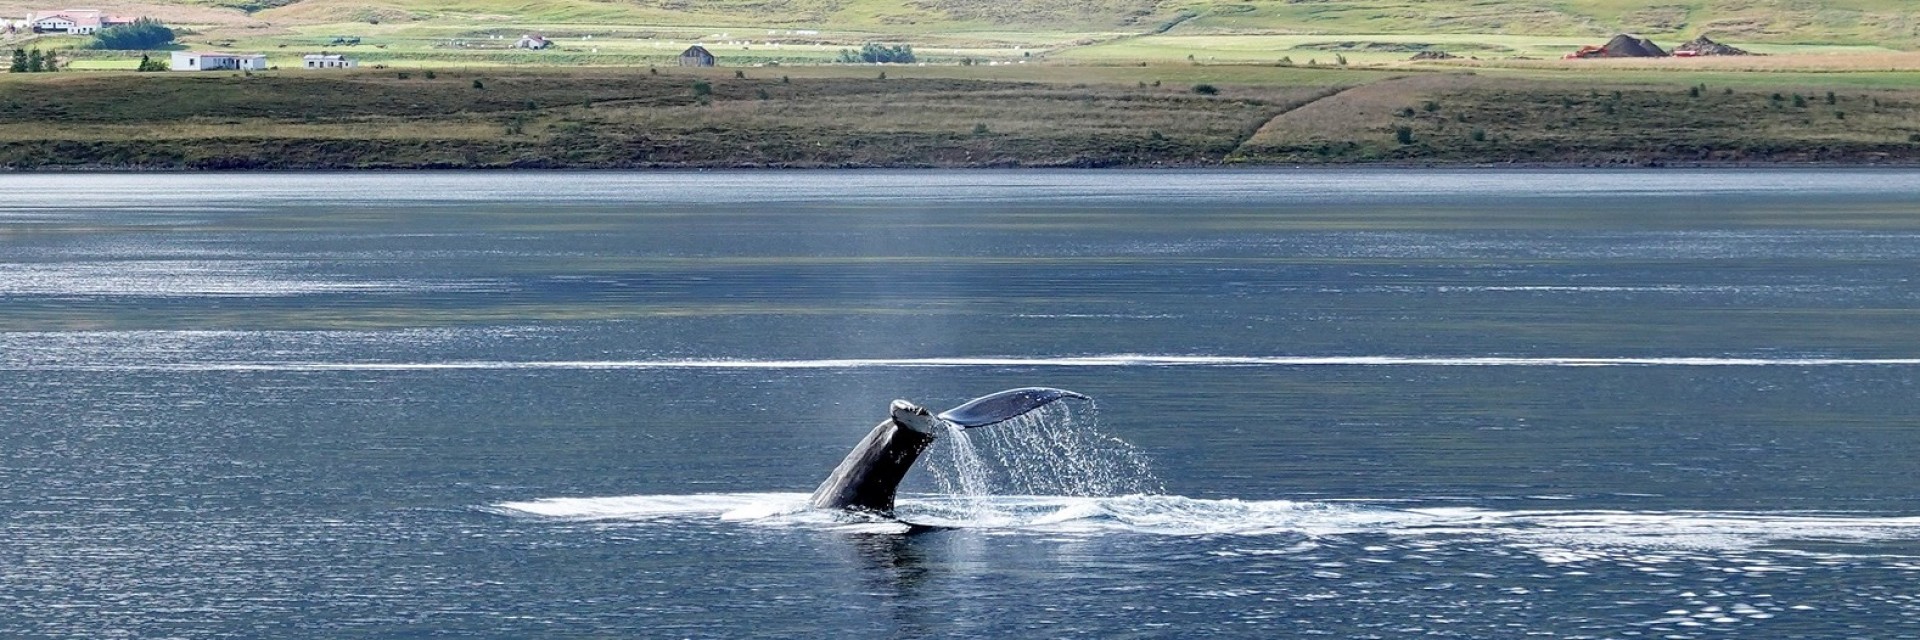 Husavik Whale watching